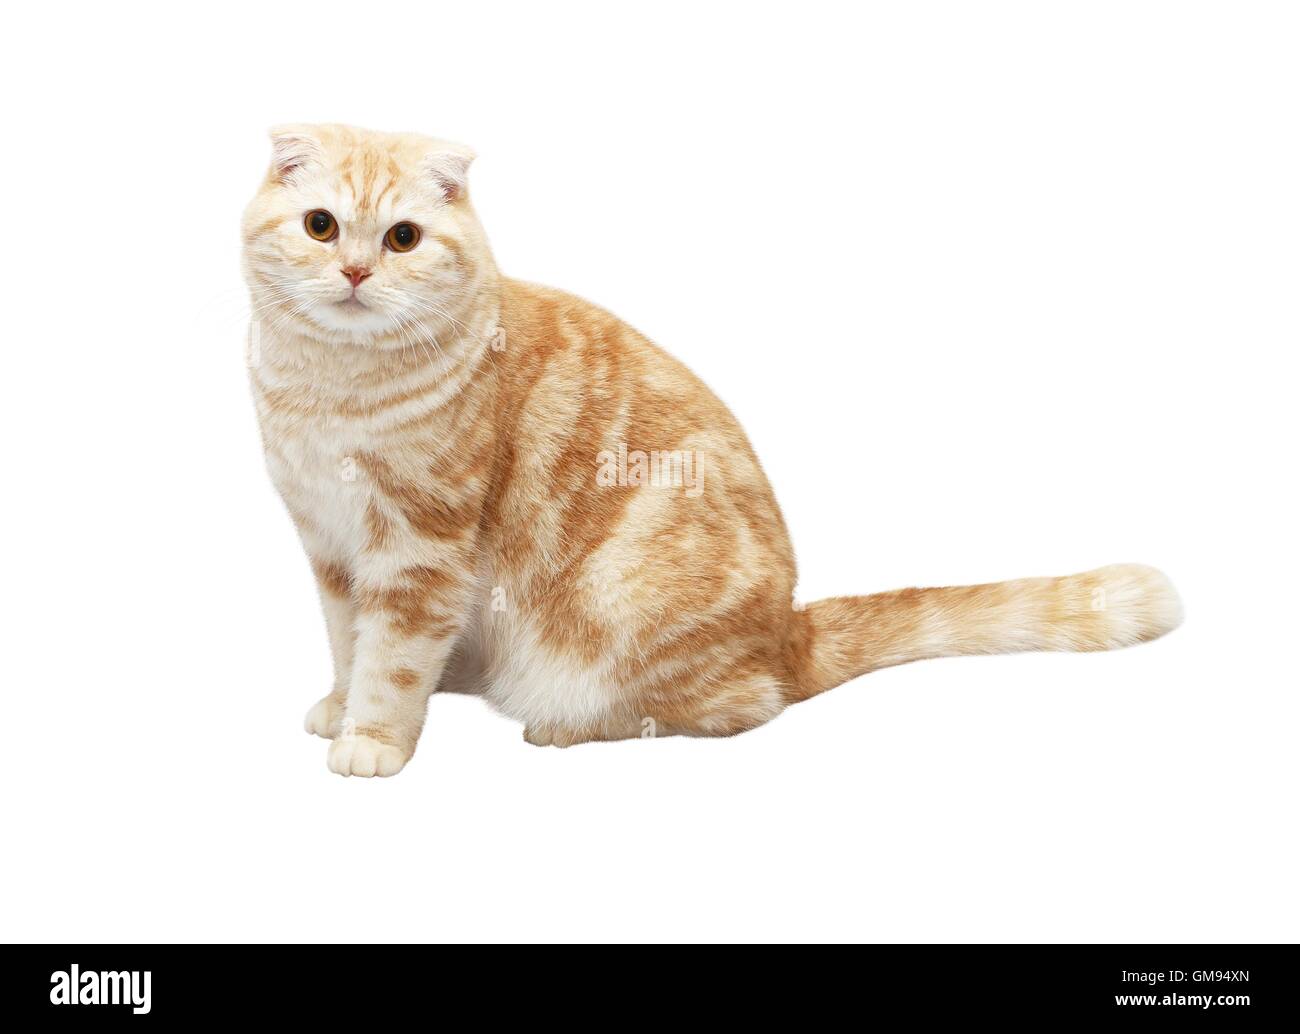 Cream Tabby Scottish Fold cat on white background Stock Photo